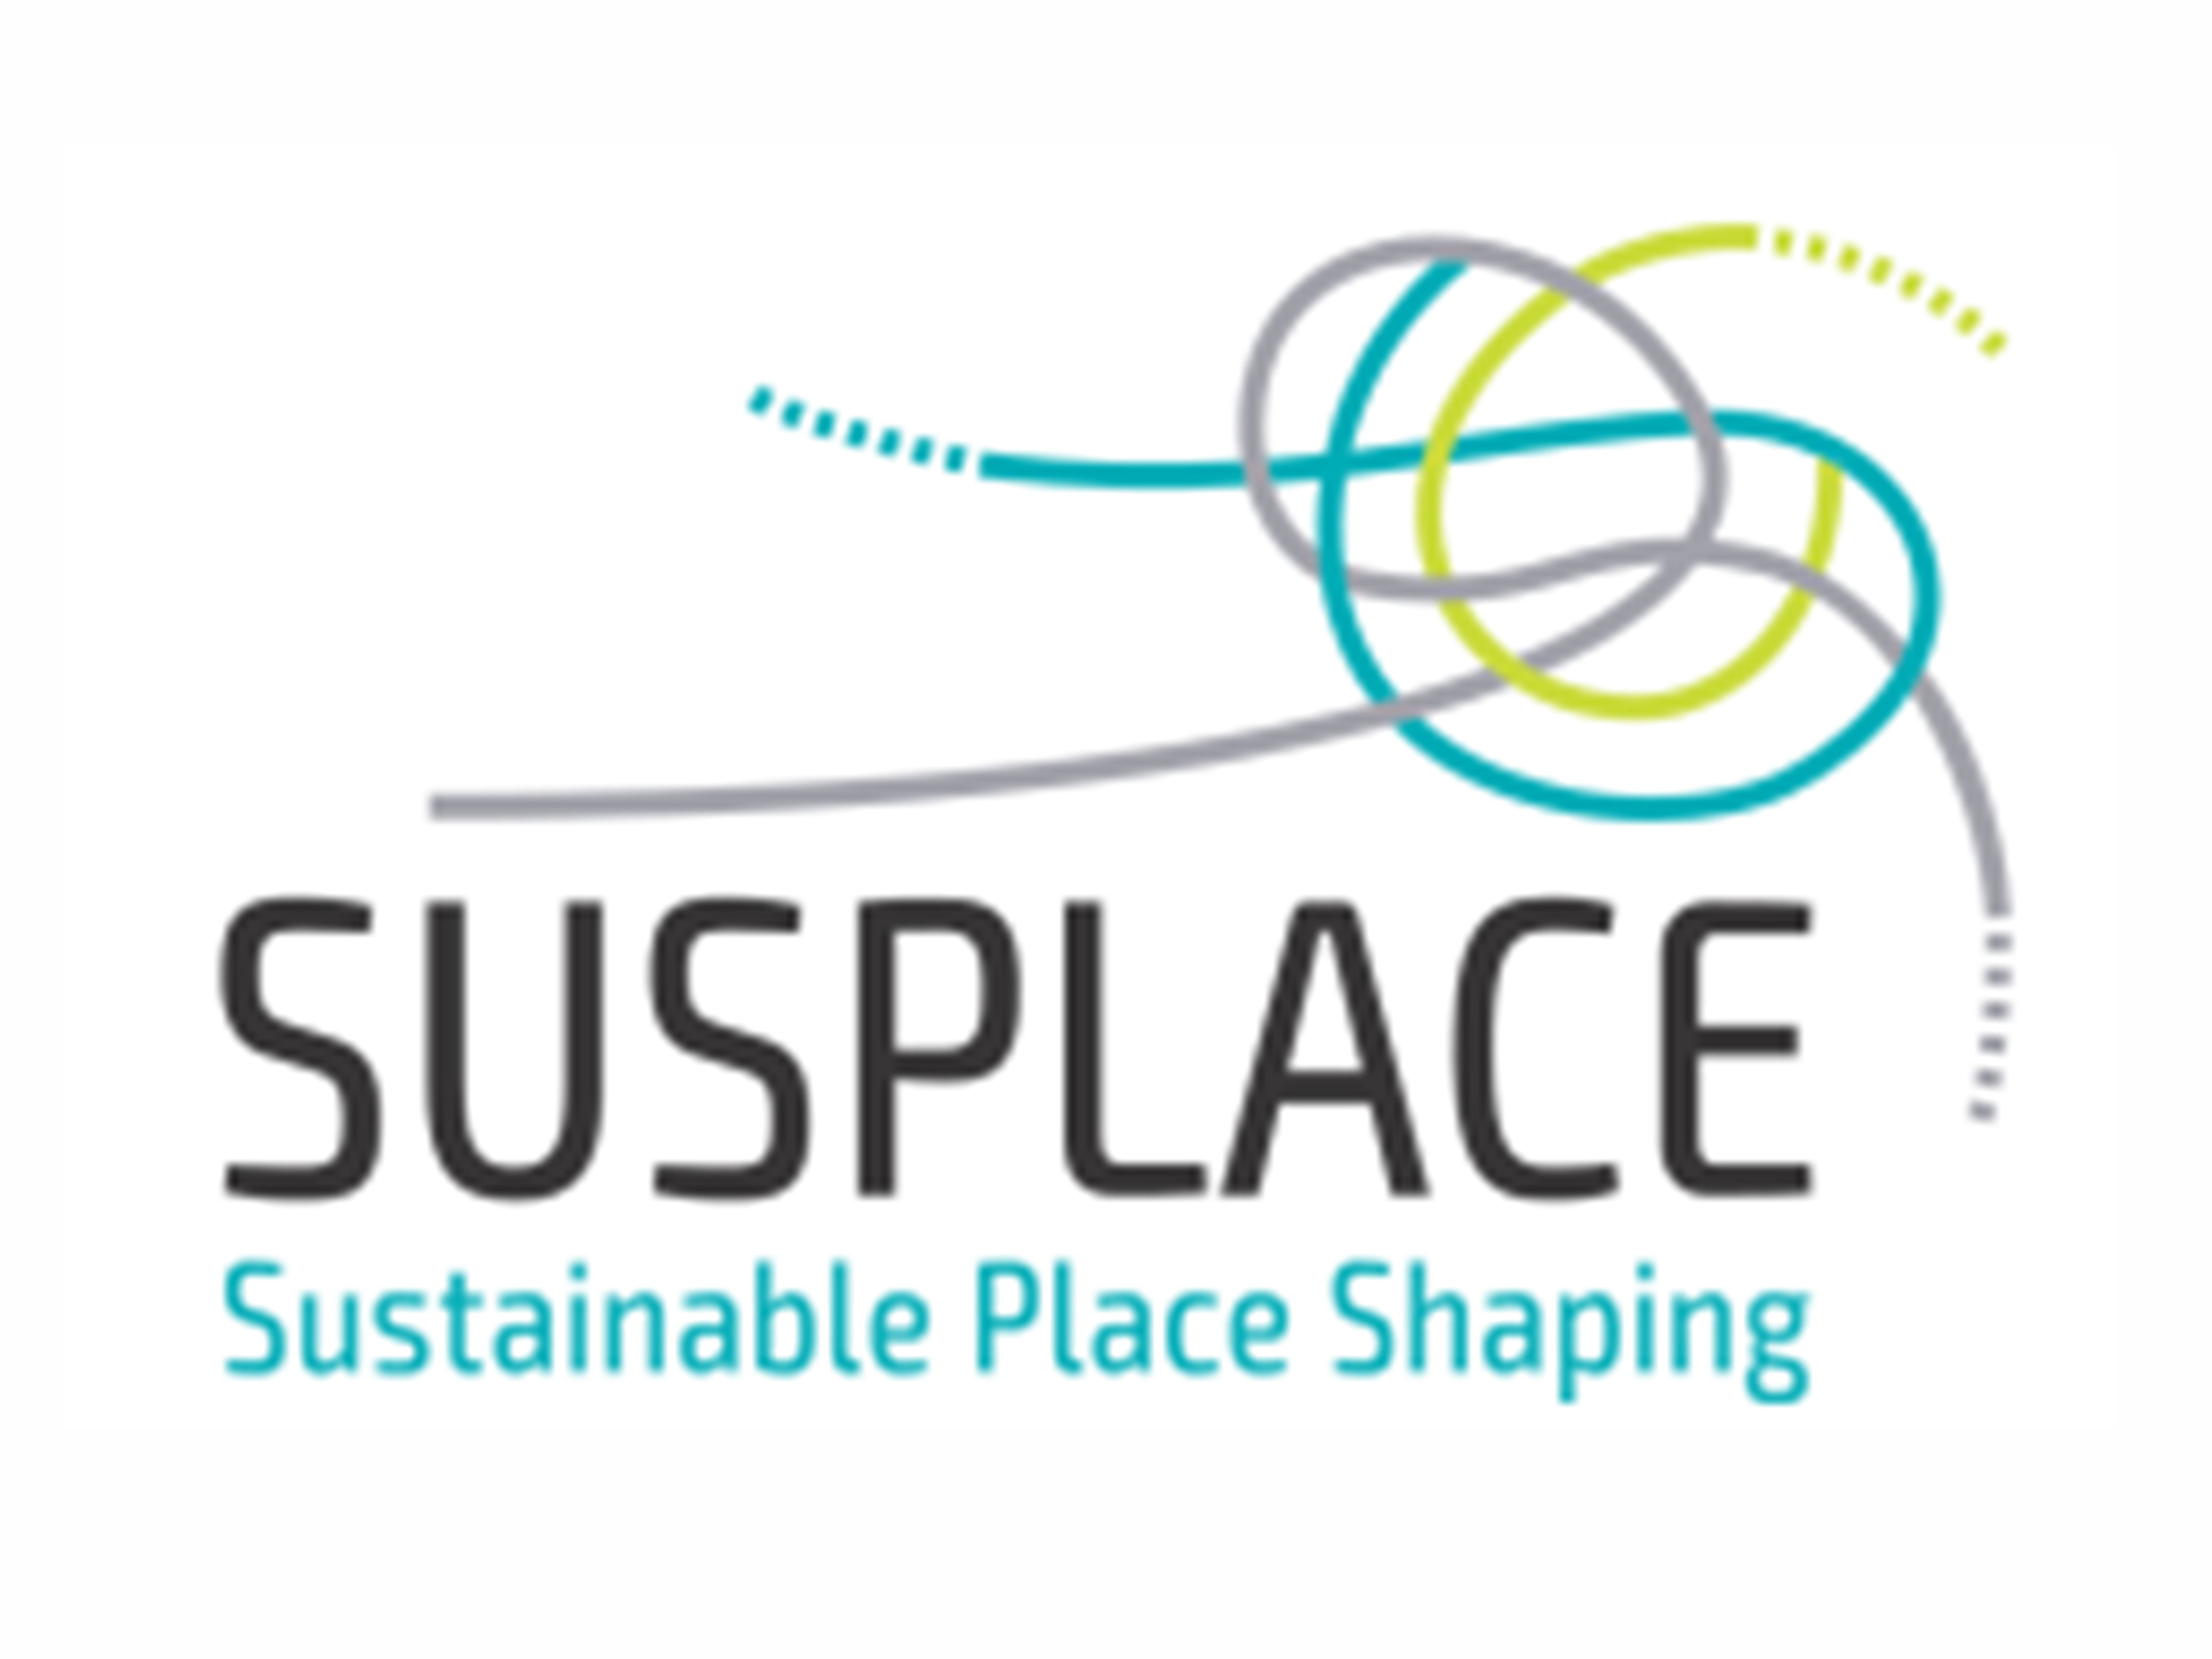 Susplace logo